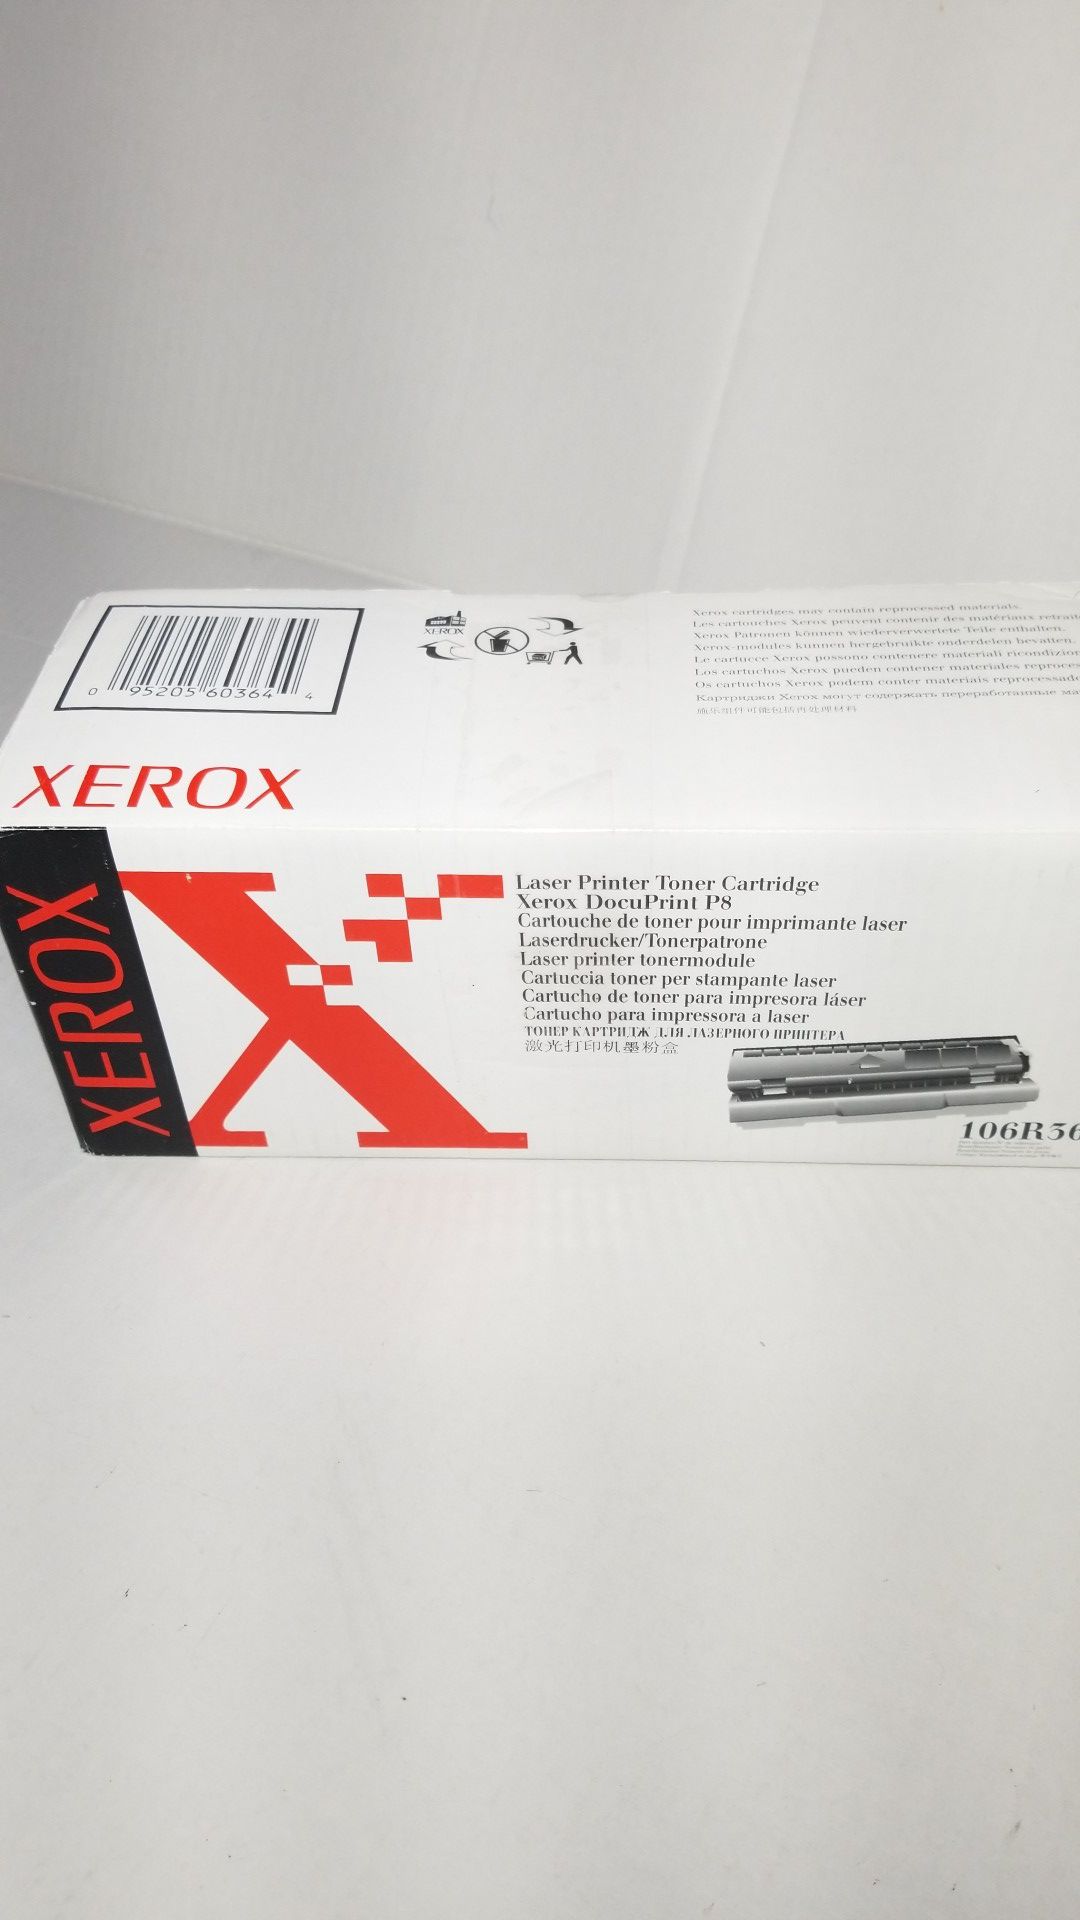 Xerox laser printer toner cartridge xerox docuprint p8